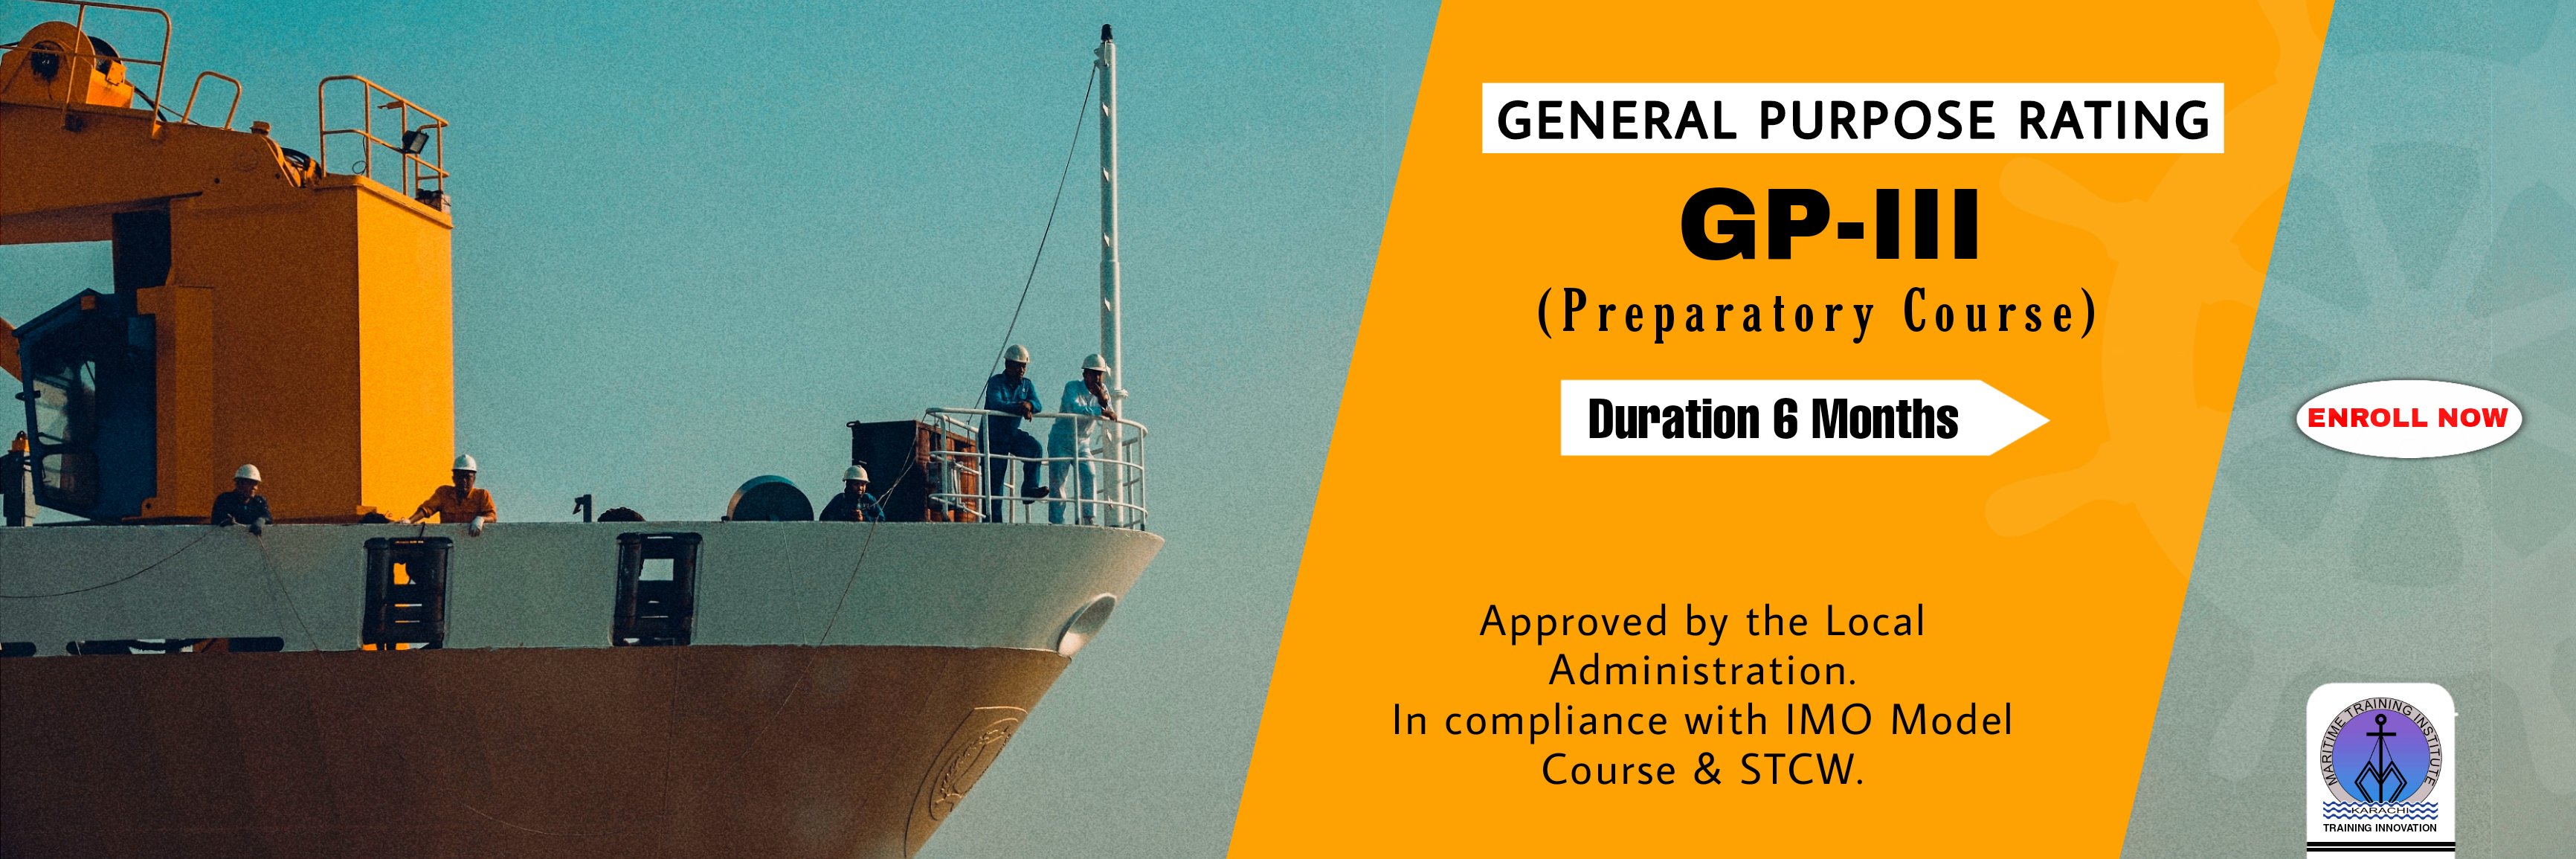 general purpose rating dp III course short marine courses karachi pakistan how to join merchant navy seaman